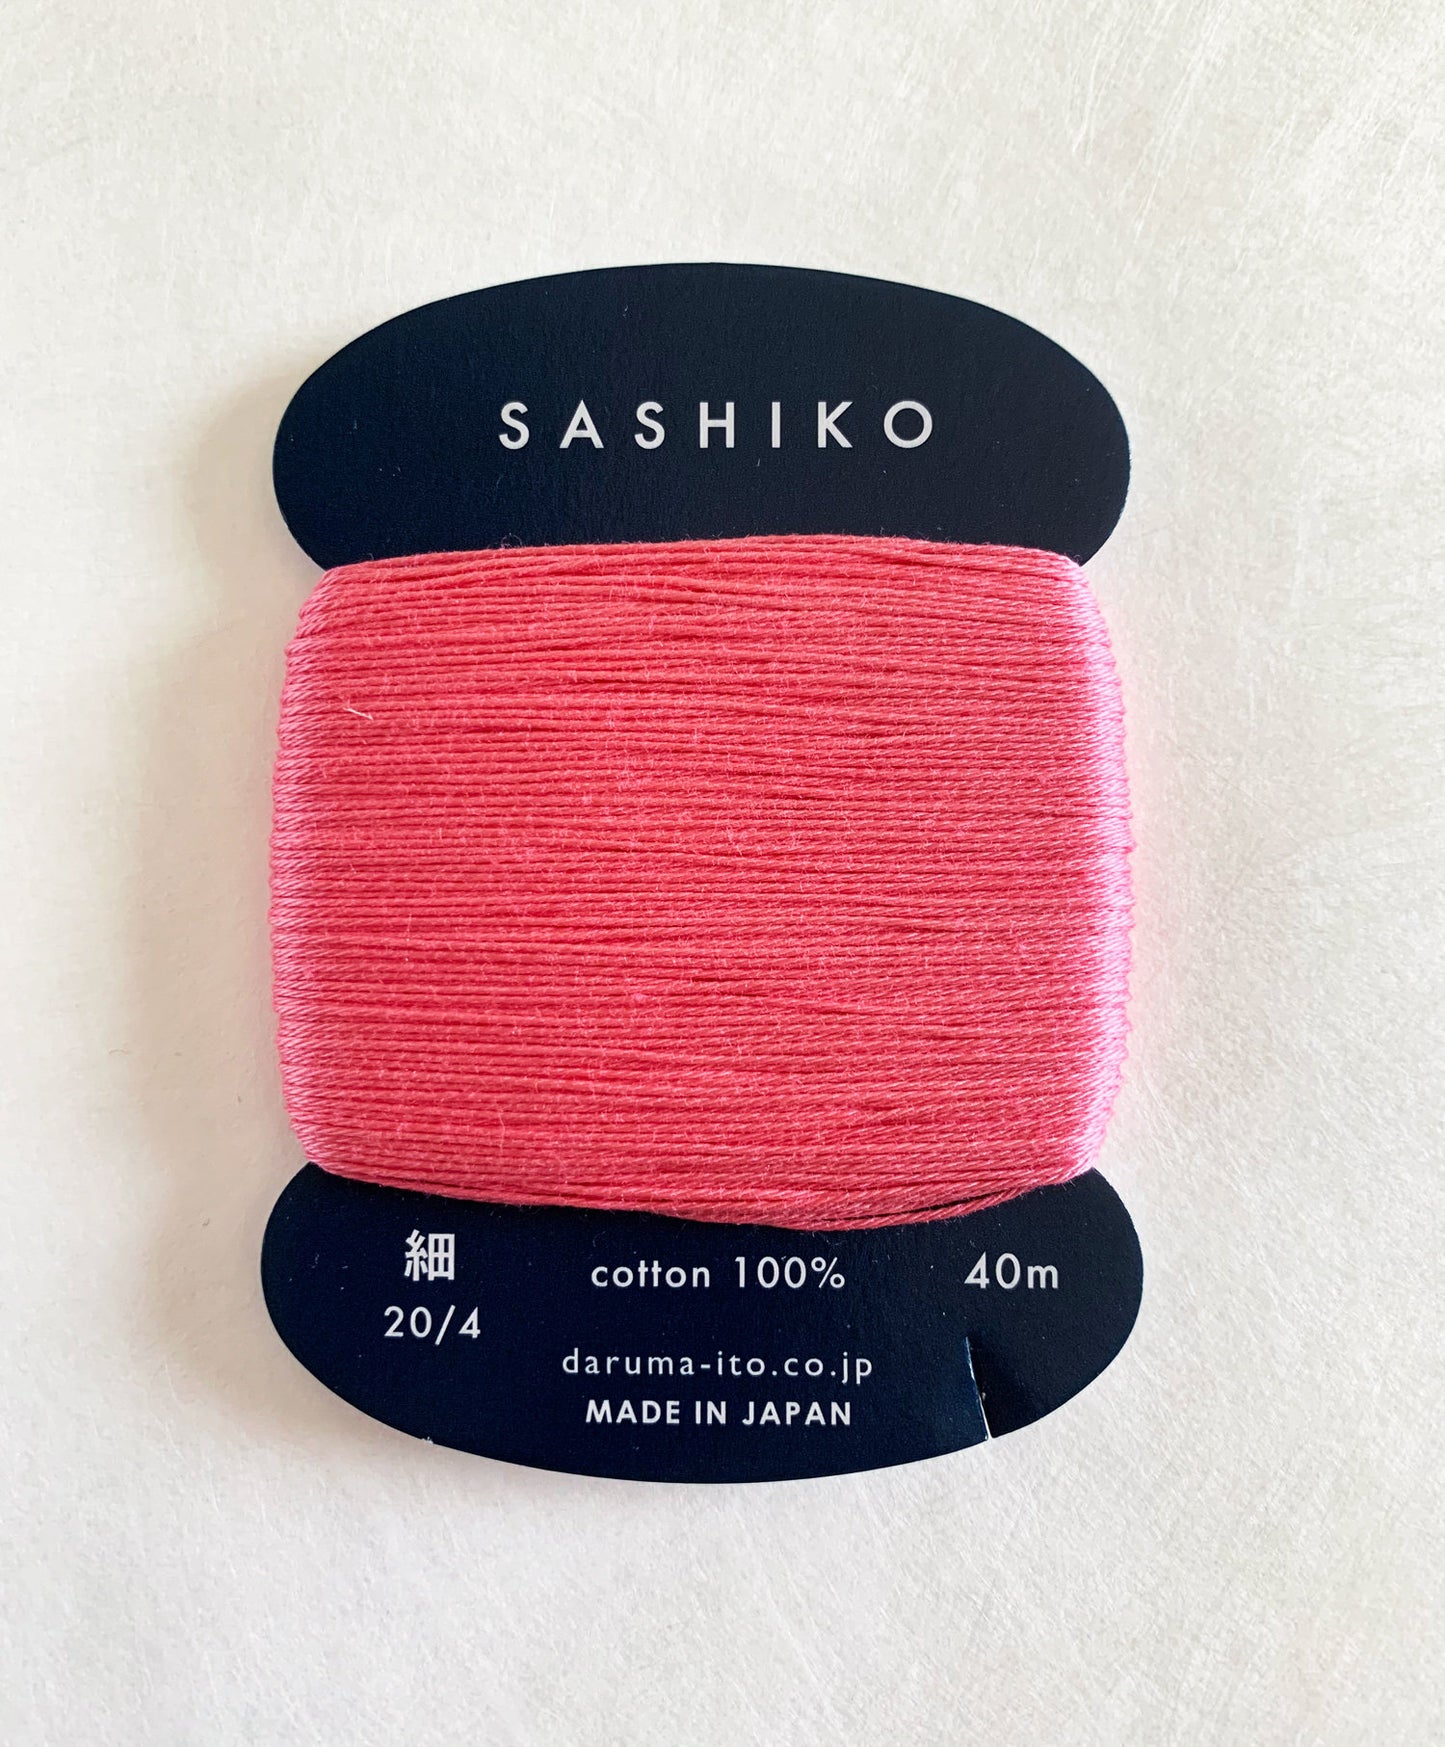 Daruma #222 APRICOT Japanese Cotton SASHIKO thread 40 meter card 20/4 梅 pink